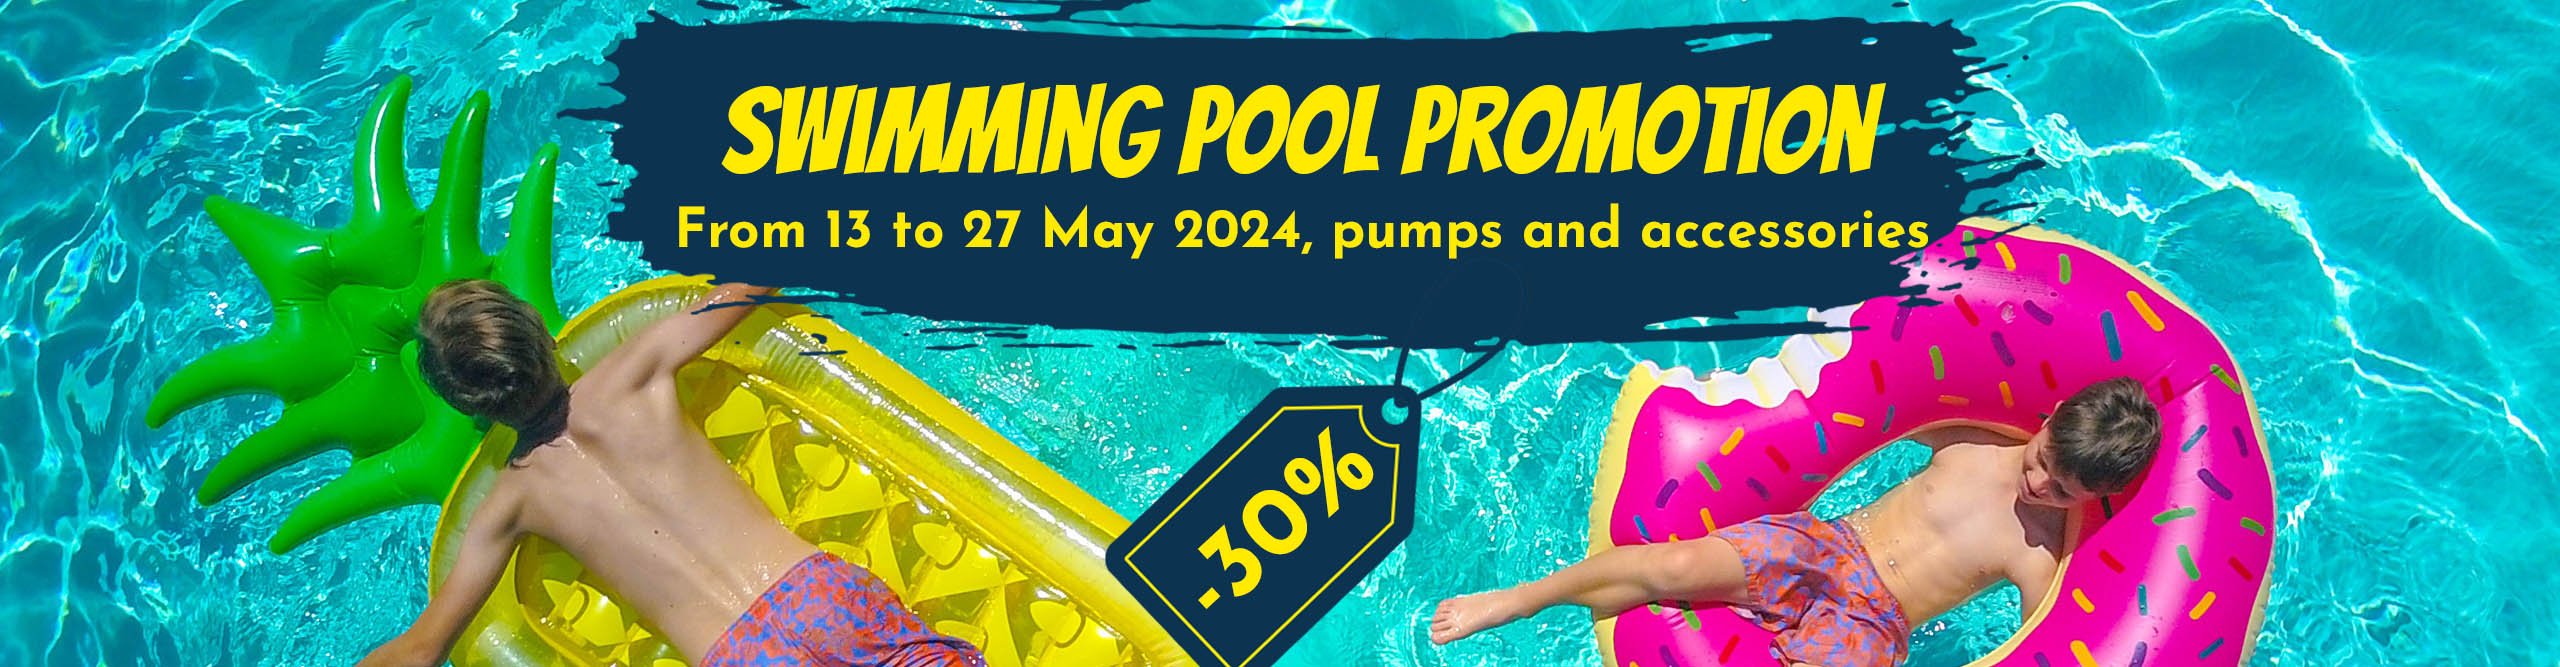 swimming pool 2 weeks promo water fitters